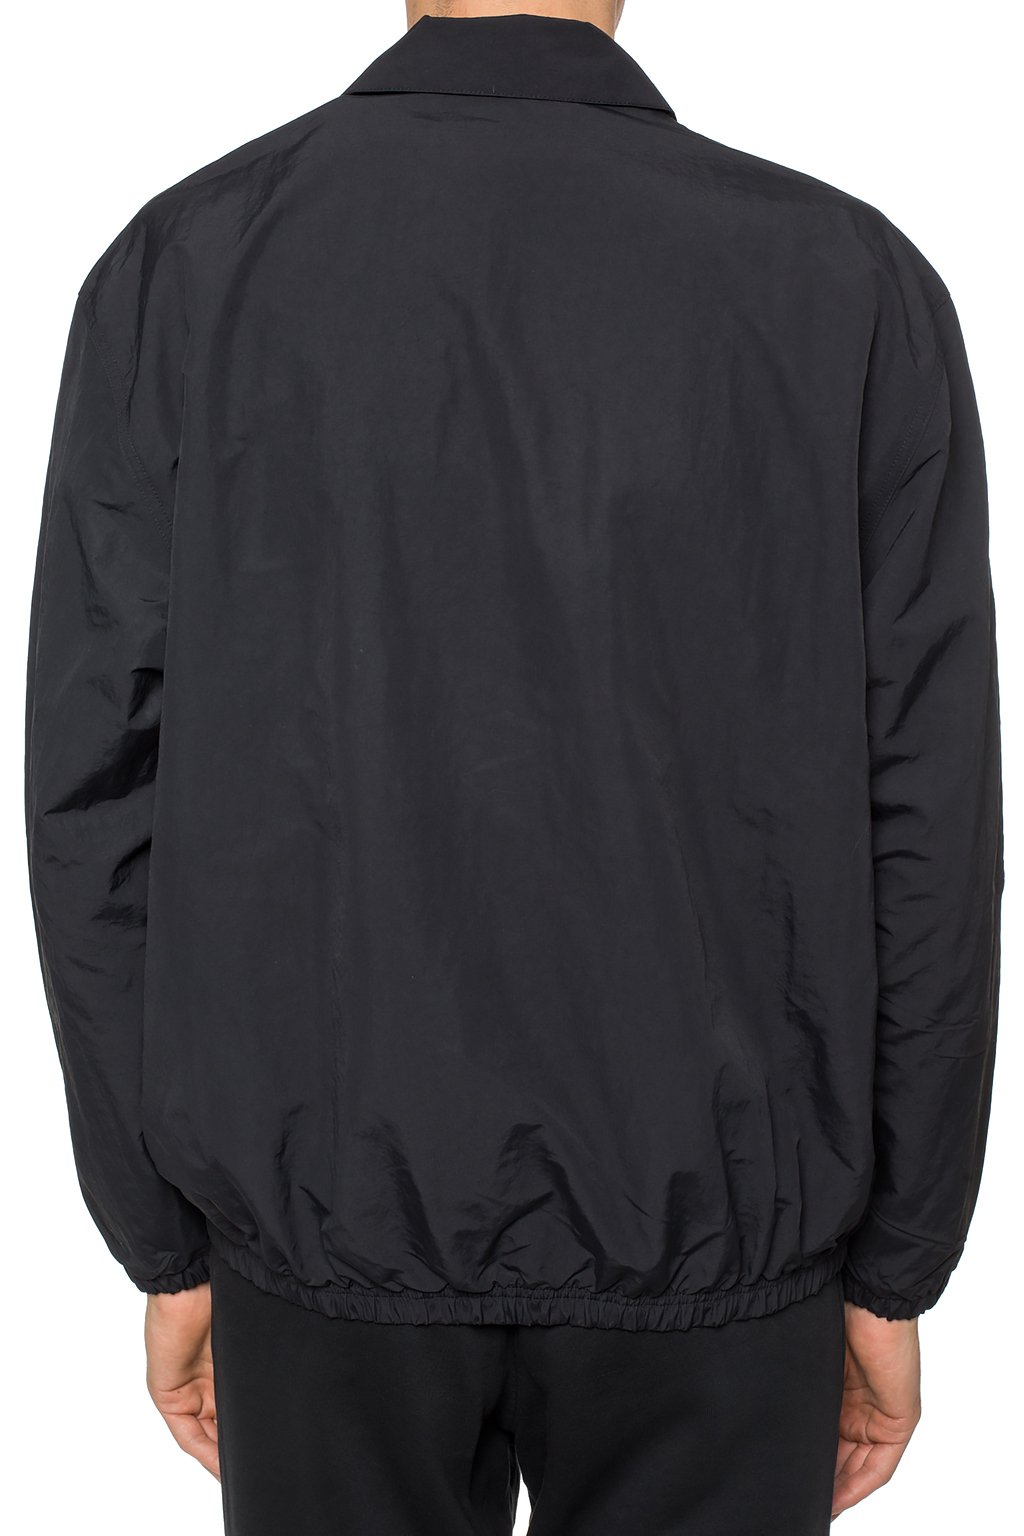 ADIDAS Originals Logo-embroidered jacket | Men's Clothing | Vitkac